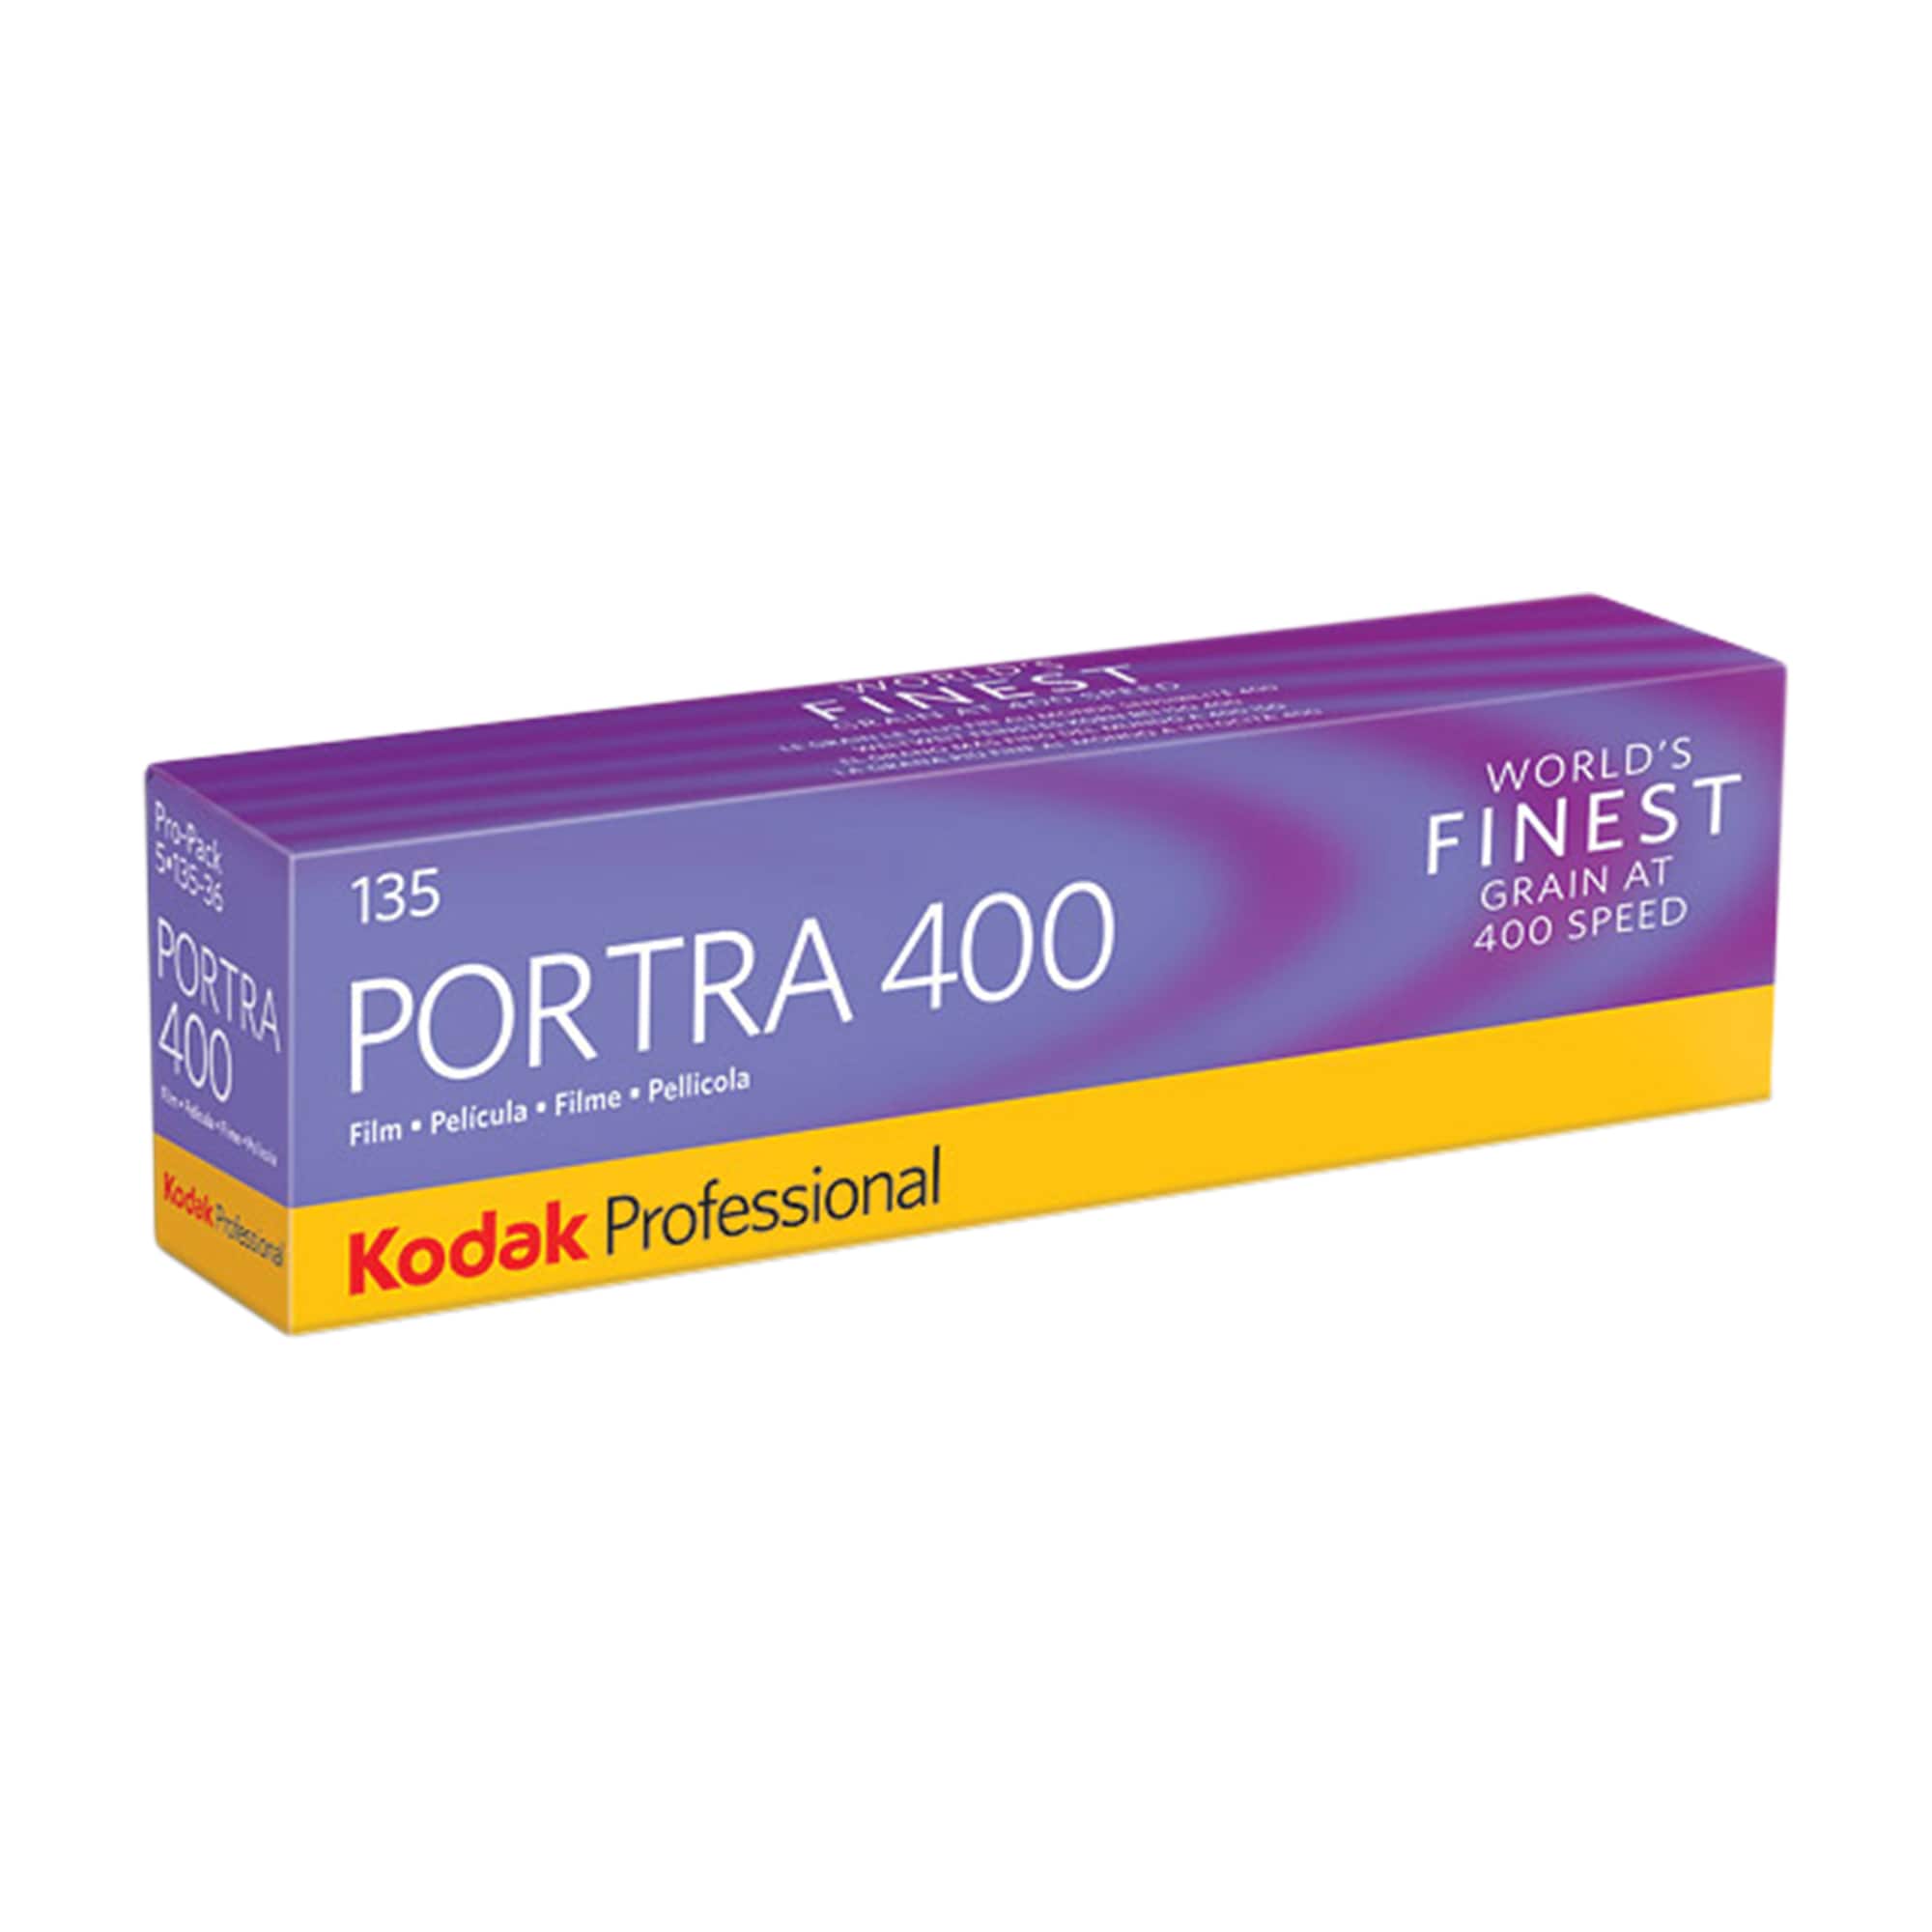 Kodak Portra 400 135 5-pack